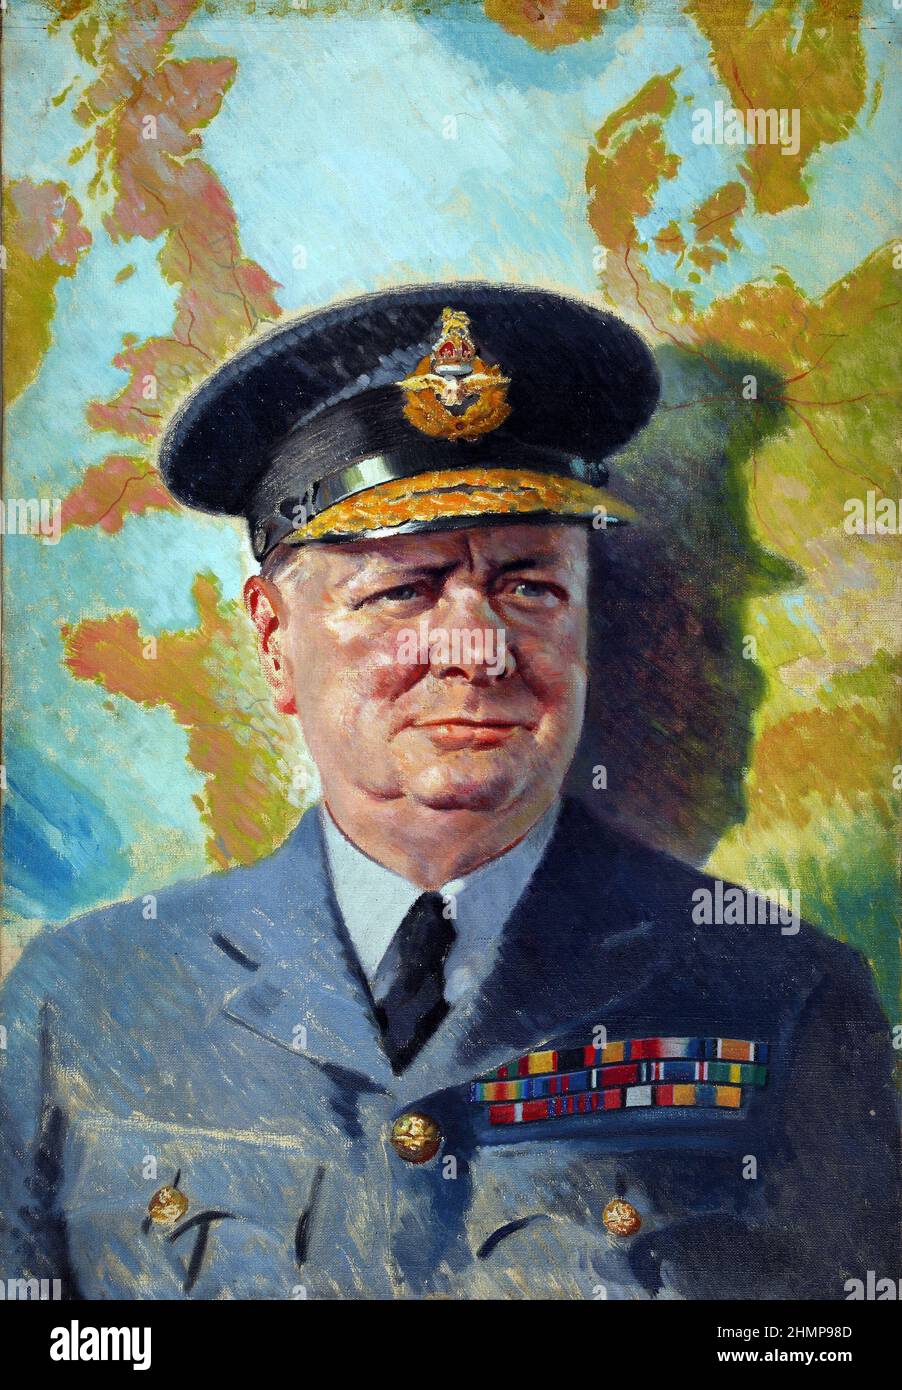 Winston Churchill 1874-1965 in RAF-Uniform. Öl auf Leinwand. Unbekannter Autor. Stockfoto